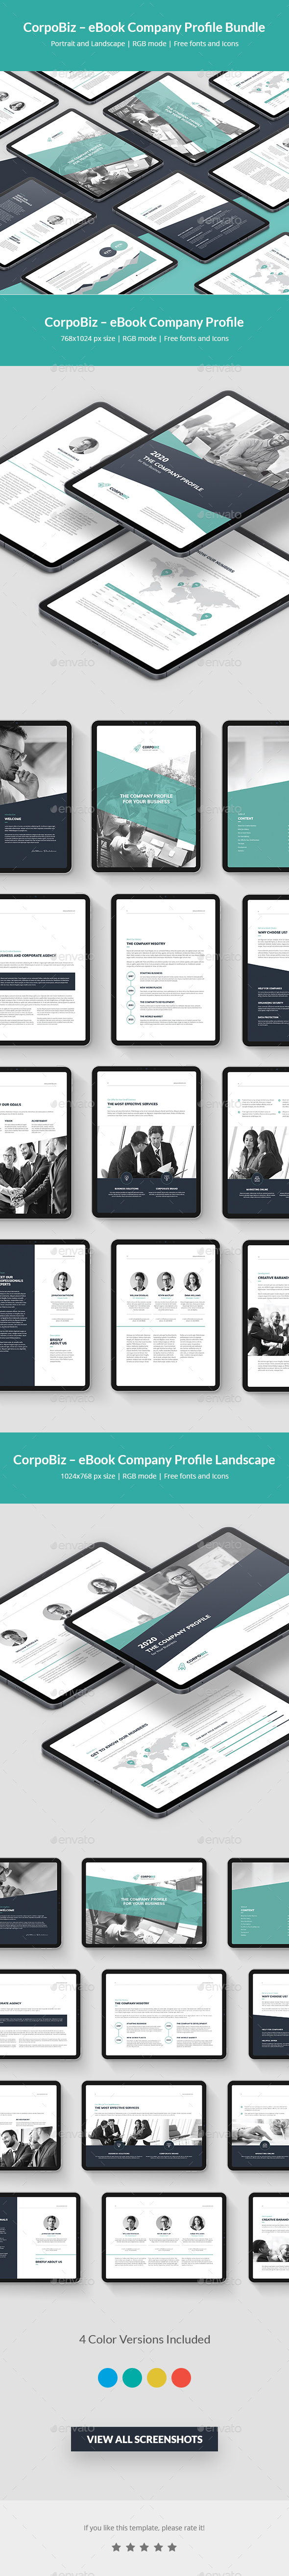 [DOWNLOAD]CorpoBiz – Business and Corporate eBook Company Profile Bundle 2 in 1